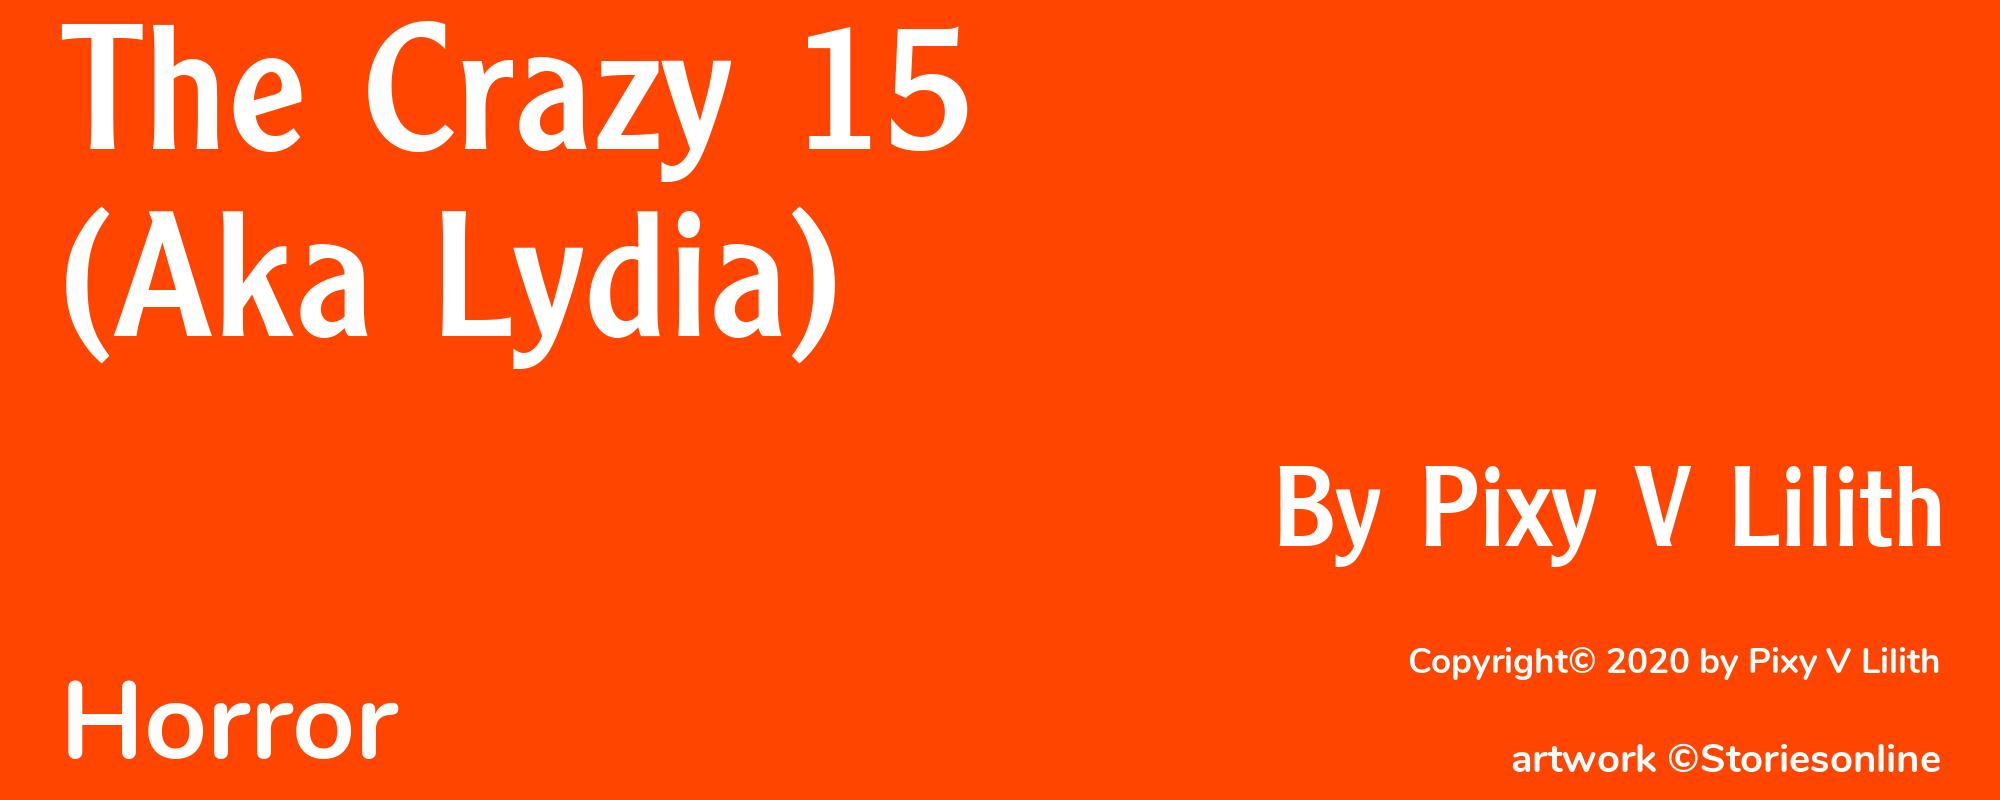 The Crazy 15 (Aka Lydia) - Cover